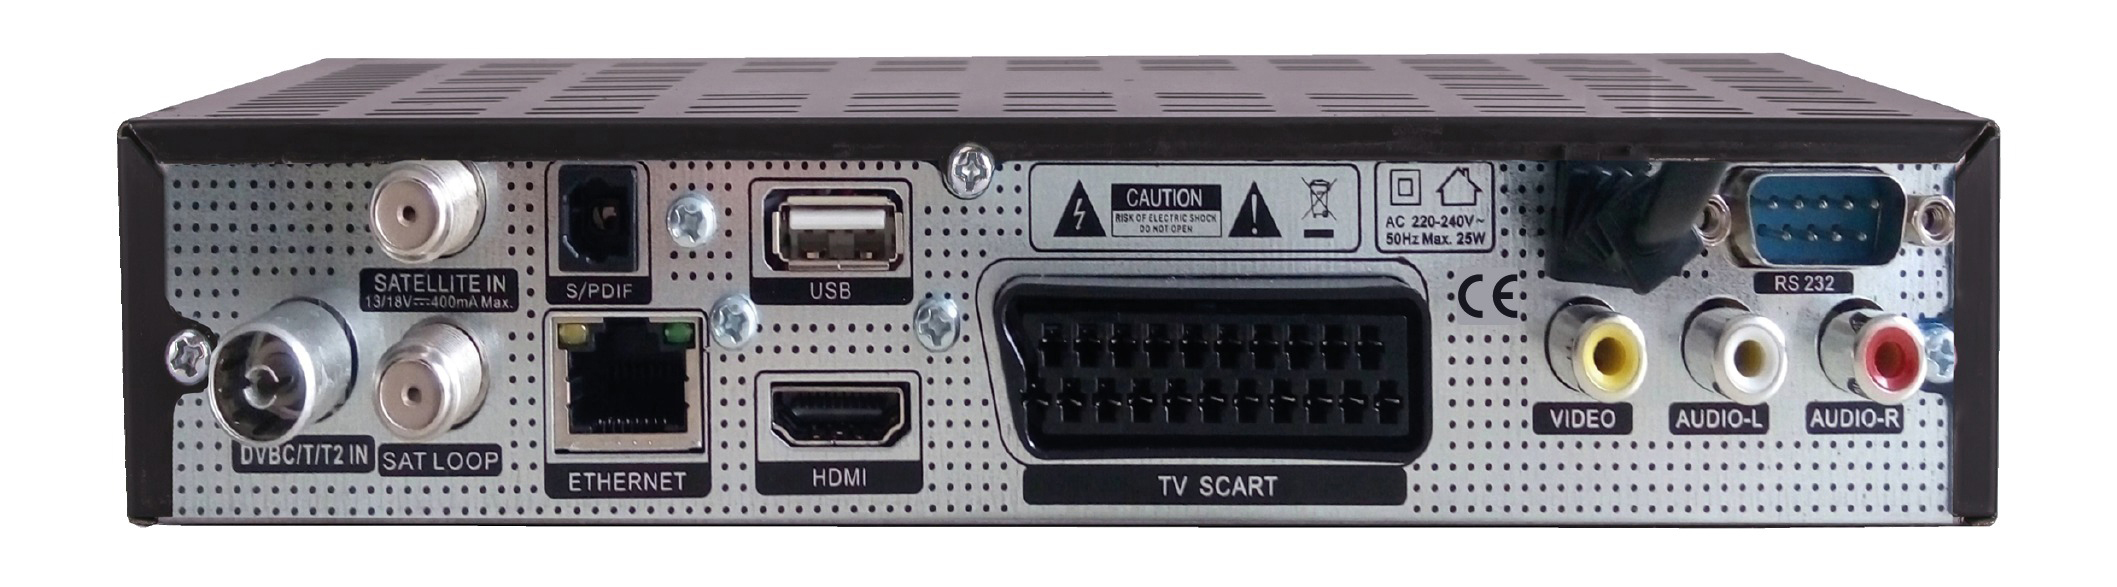 DVB-T2 (HDTV, RED DVB-C, Plus Sloth PVR-Funktion, DVB-S, Receiver PVR Combo HD, Twin DVB-S2, Combo Tuner, DVB-C2, Schwarz) OPTICUM